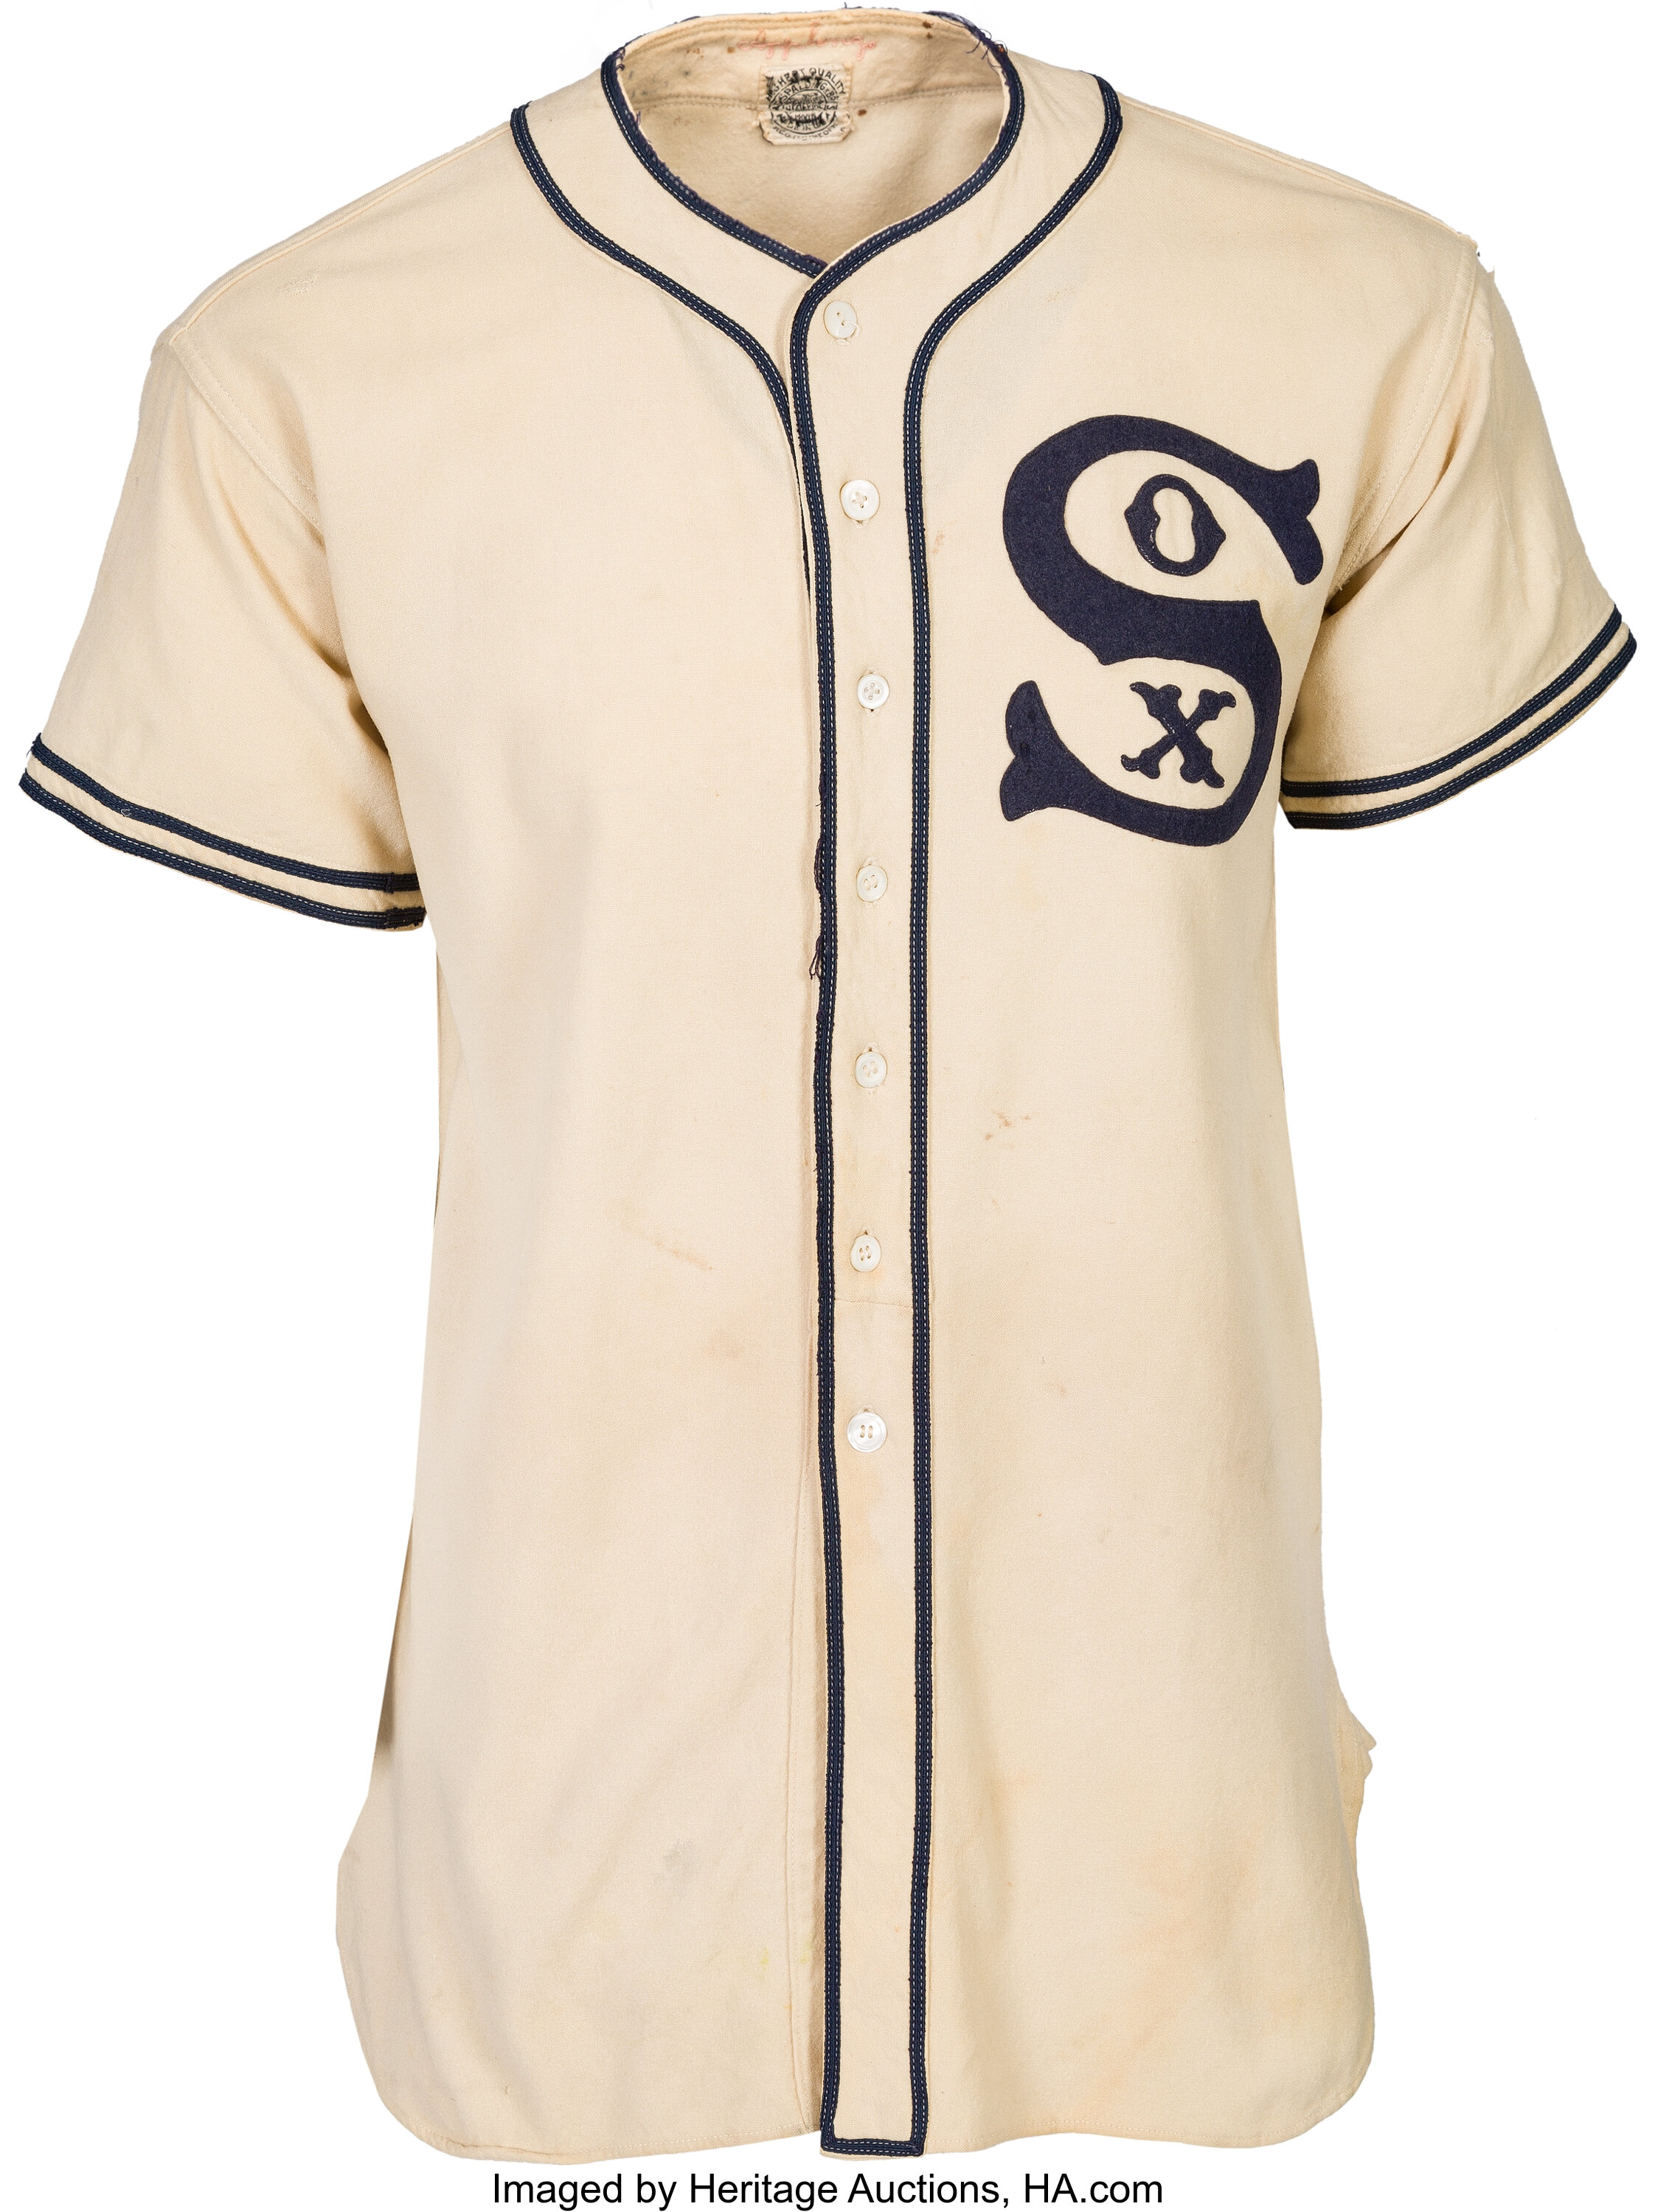 1937 Luke Appling Game Worn Chicago White Sox Jersey. Baseball